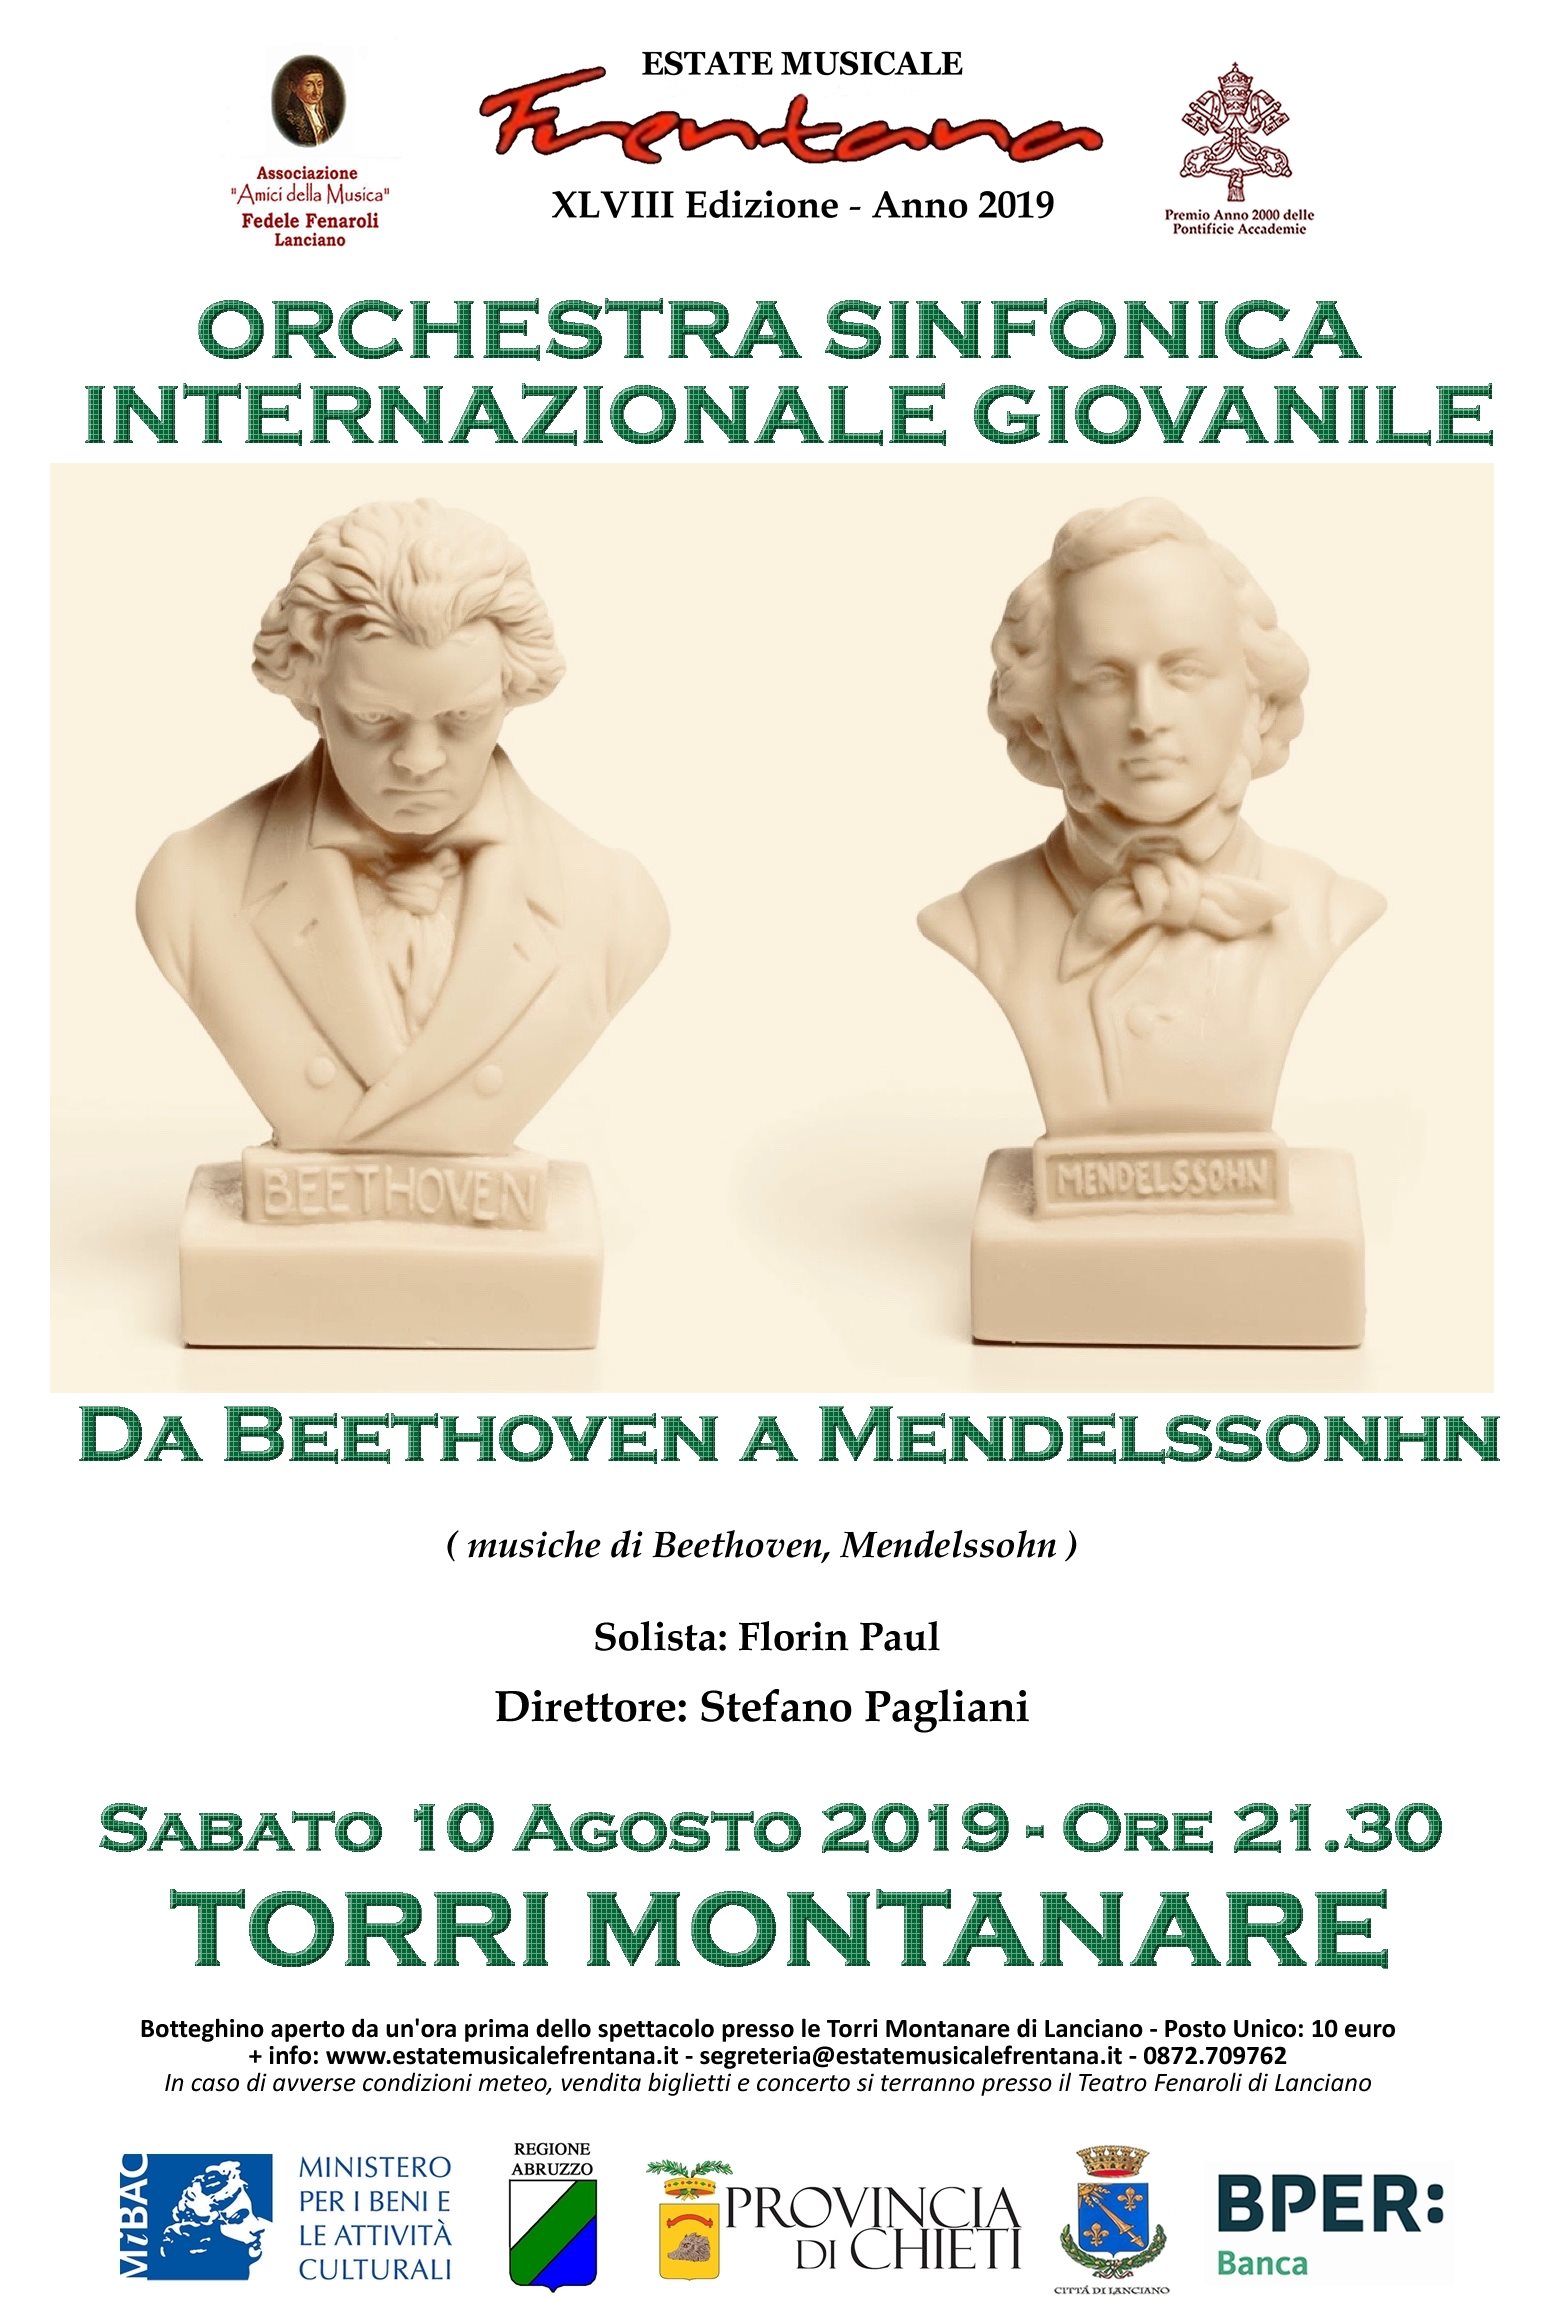 “Da Beethoven a Mendelssohn” - Orchestra Sinfonica Internazionale Giovanile